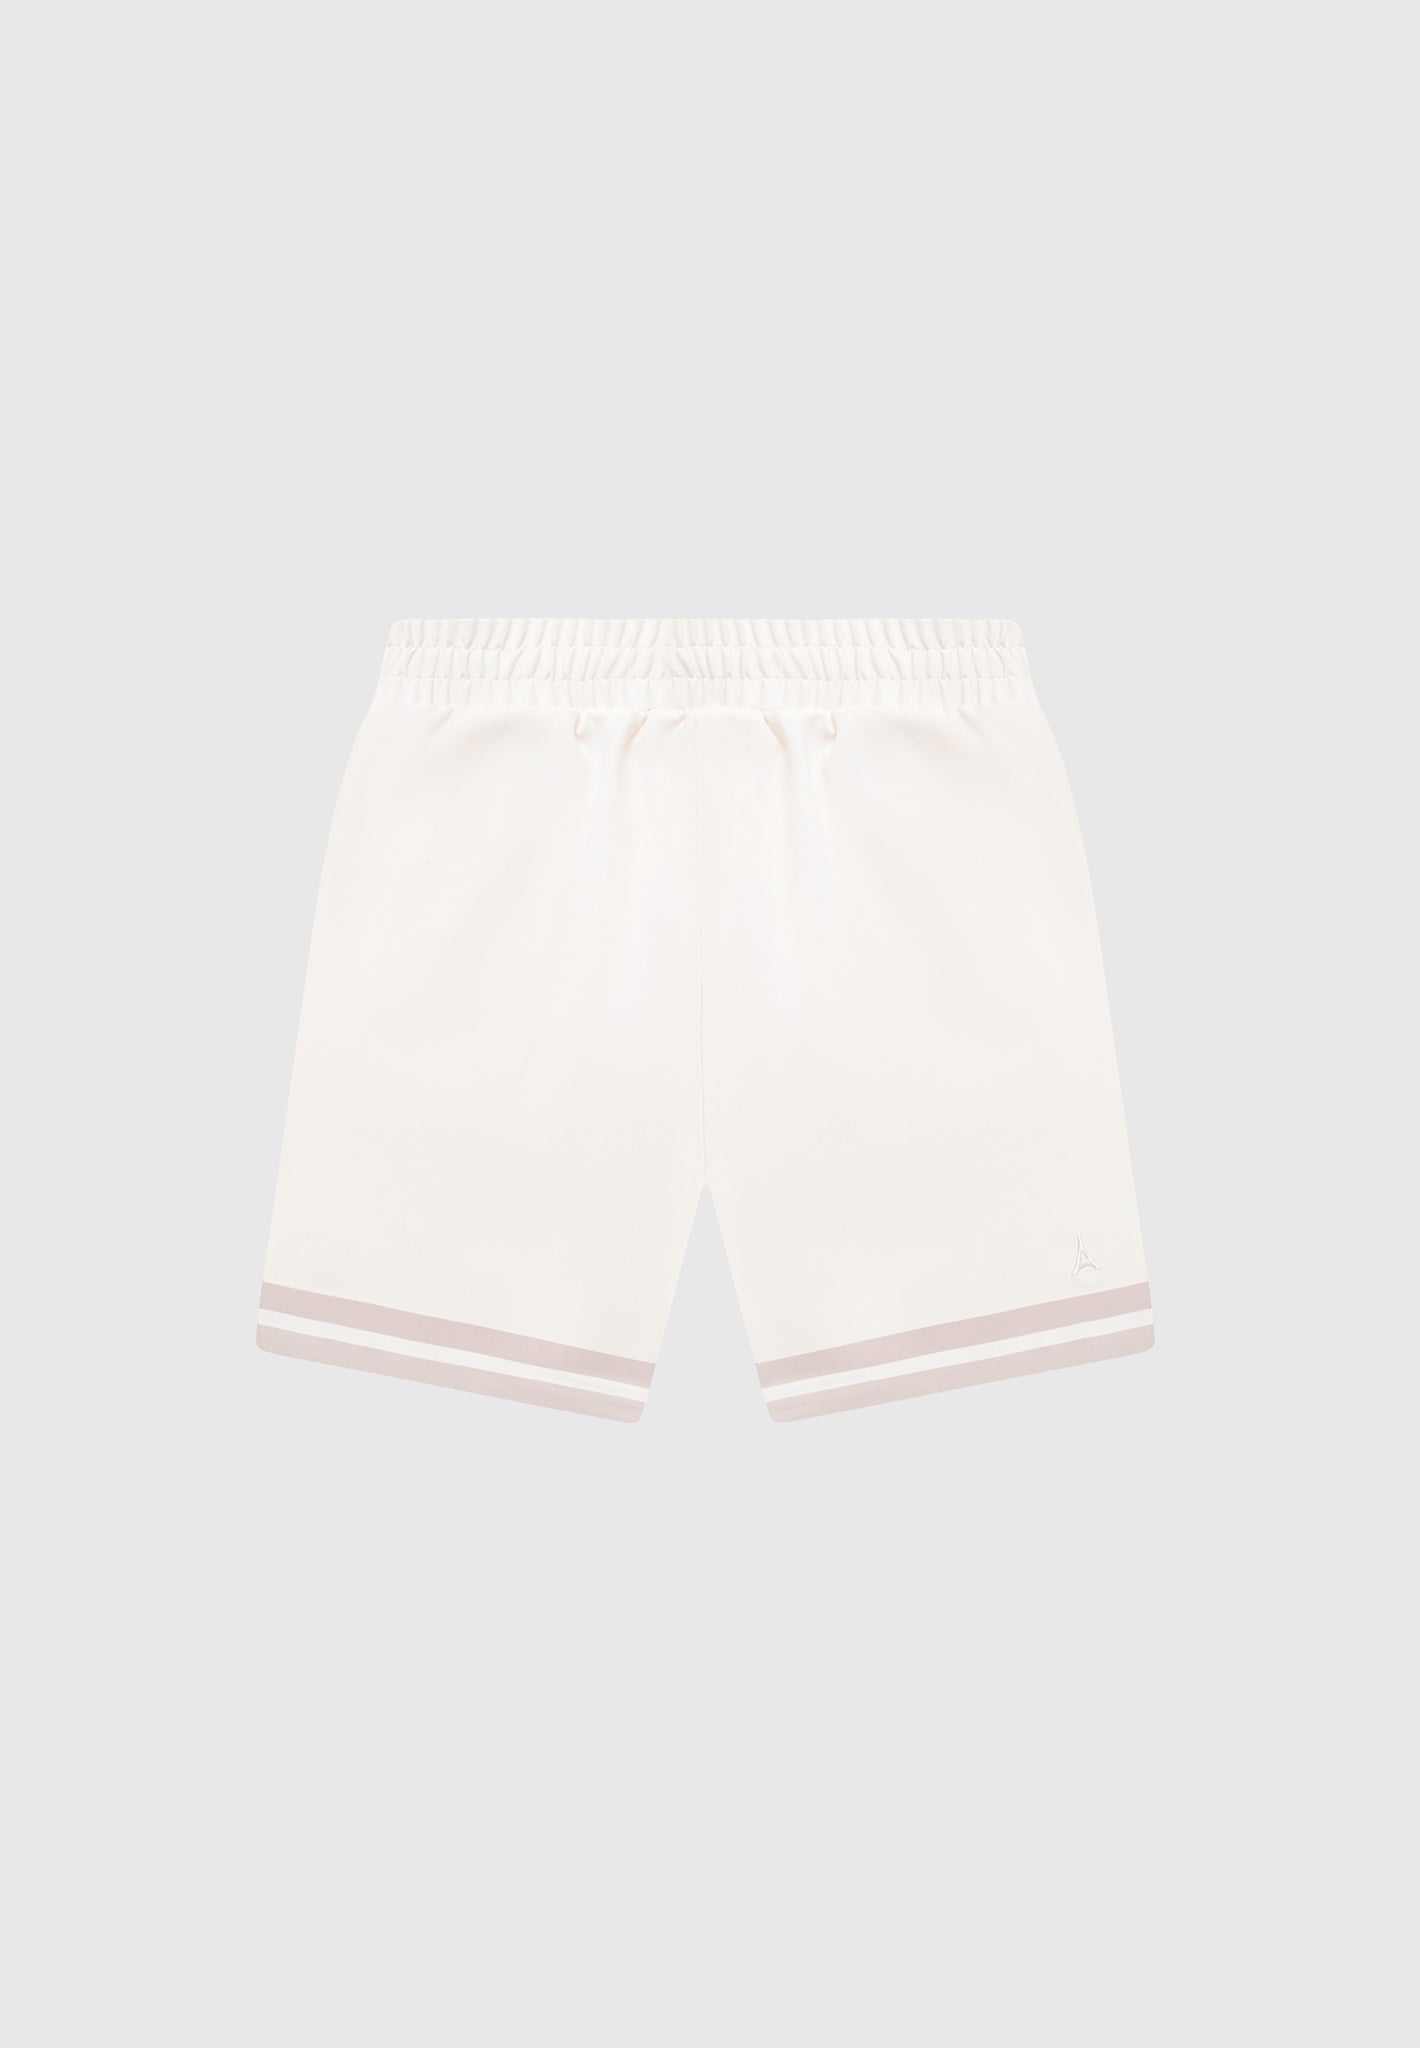 floral-border-shorts-cream